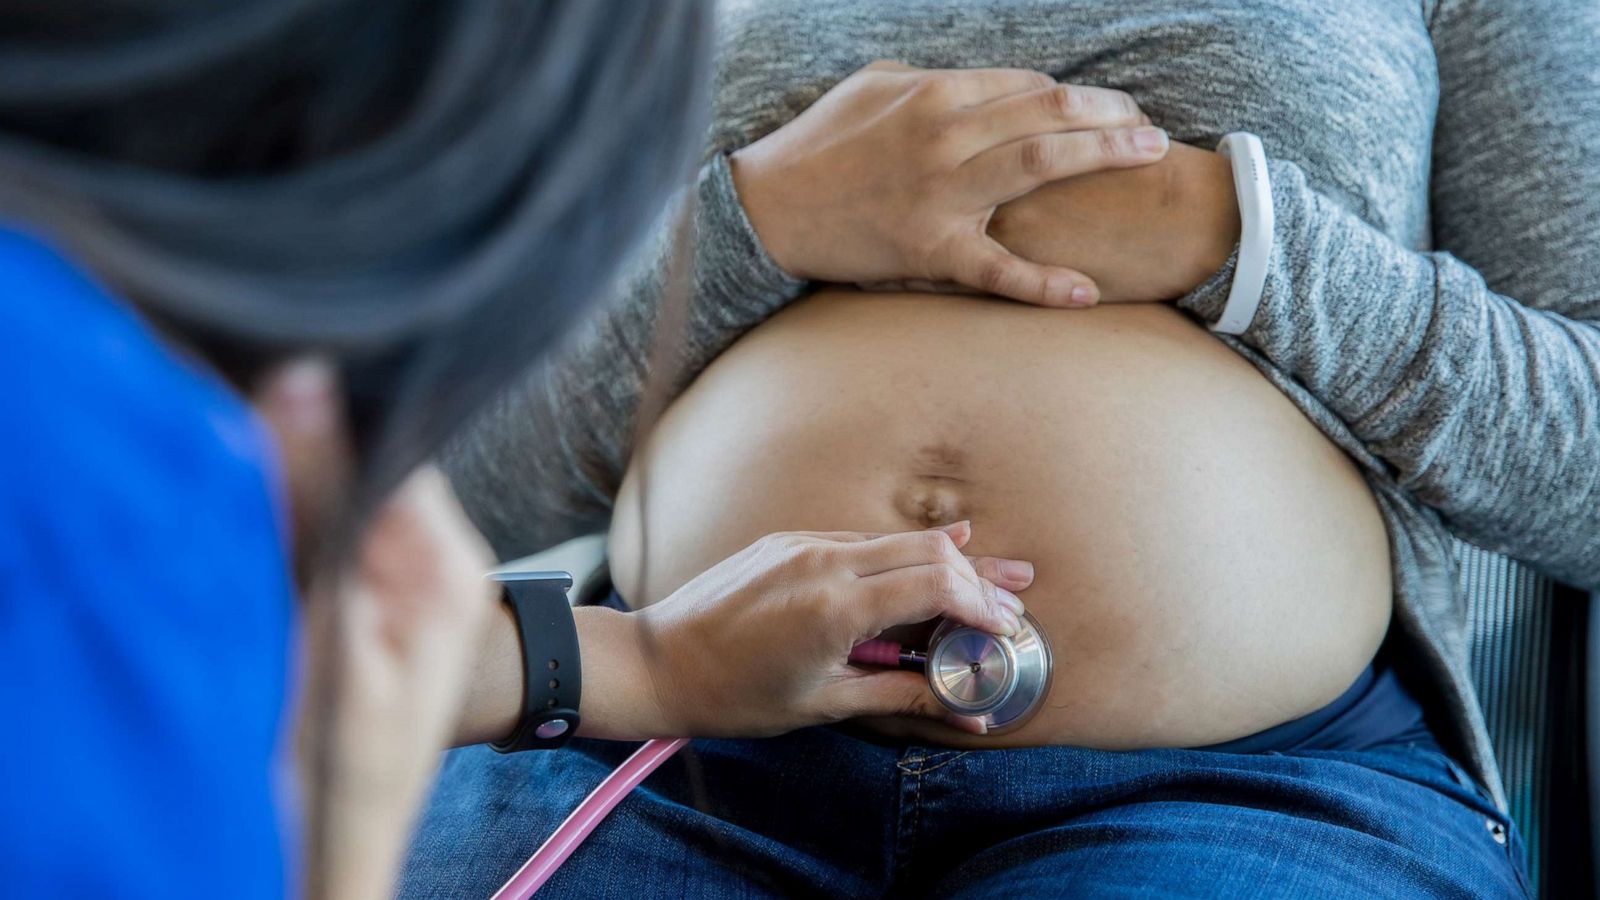 US maternal mortality increased 33